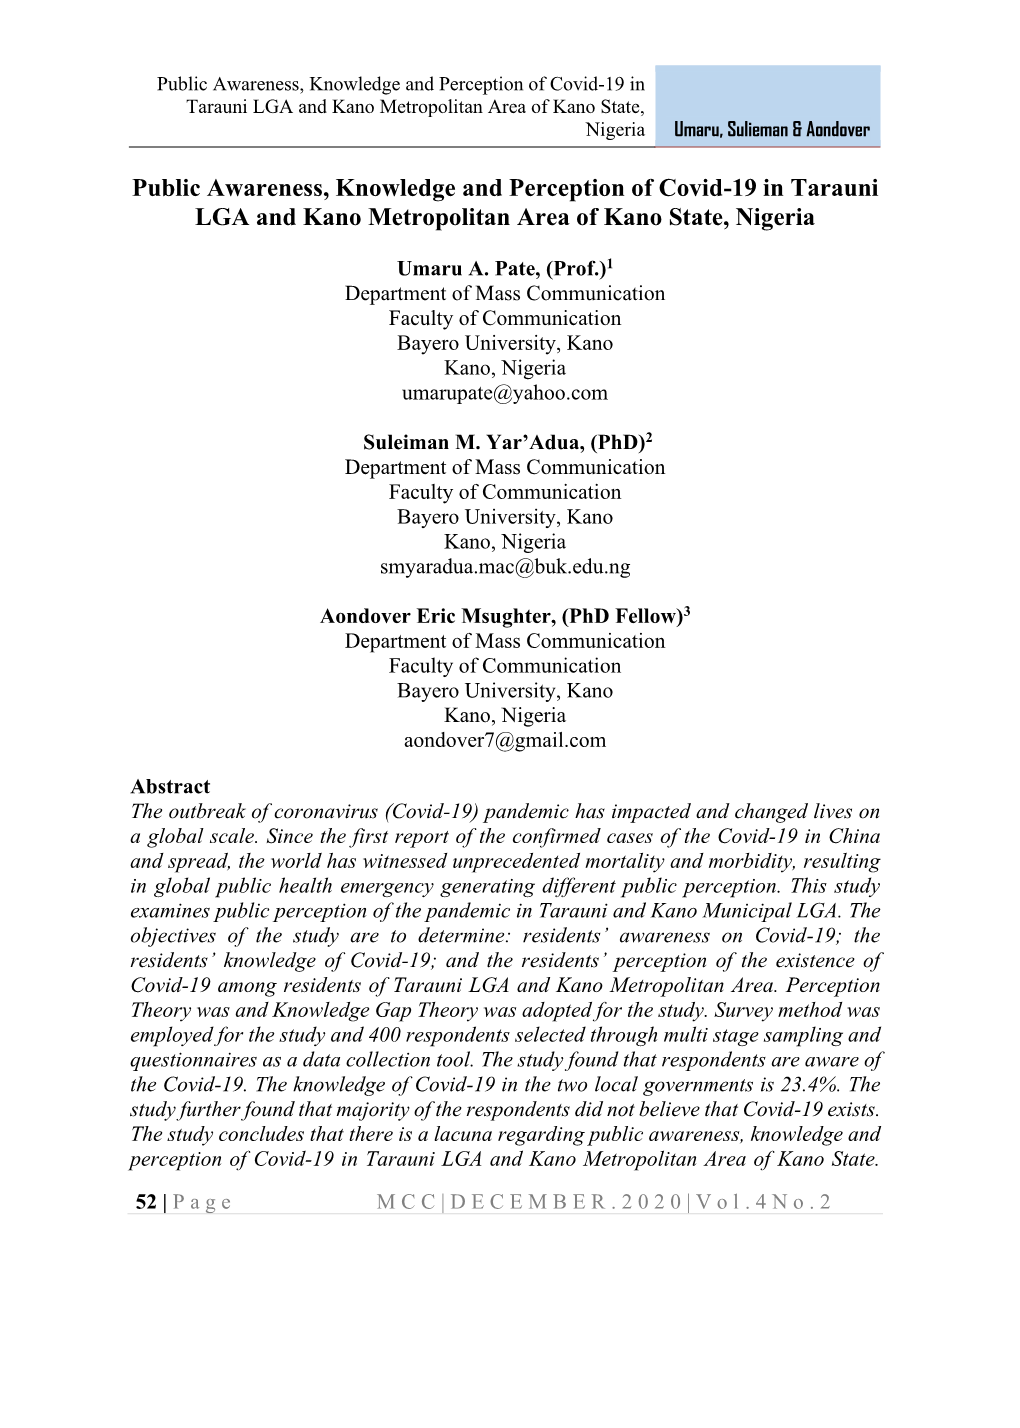 Public Awareness, Knowledge and Perception of Covid-19 in Tarauni LGA and Kano Metropolitan Area of Kano State, Nigeria Umaru, Sulieman & Aondover